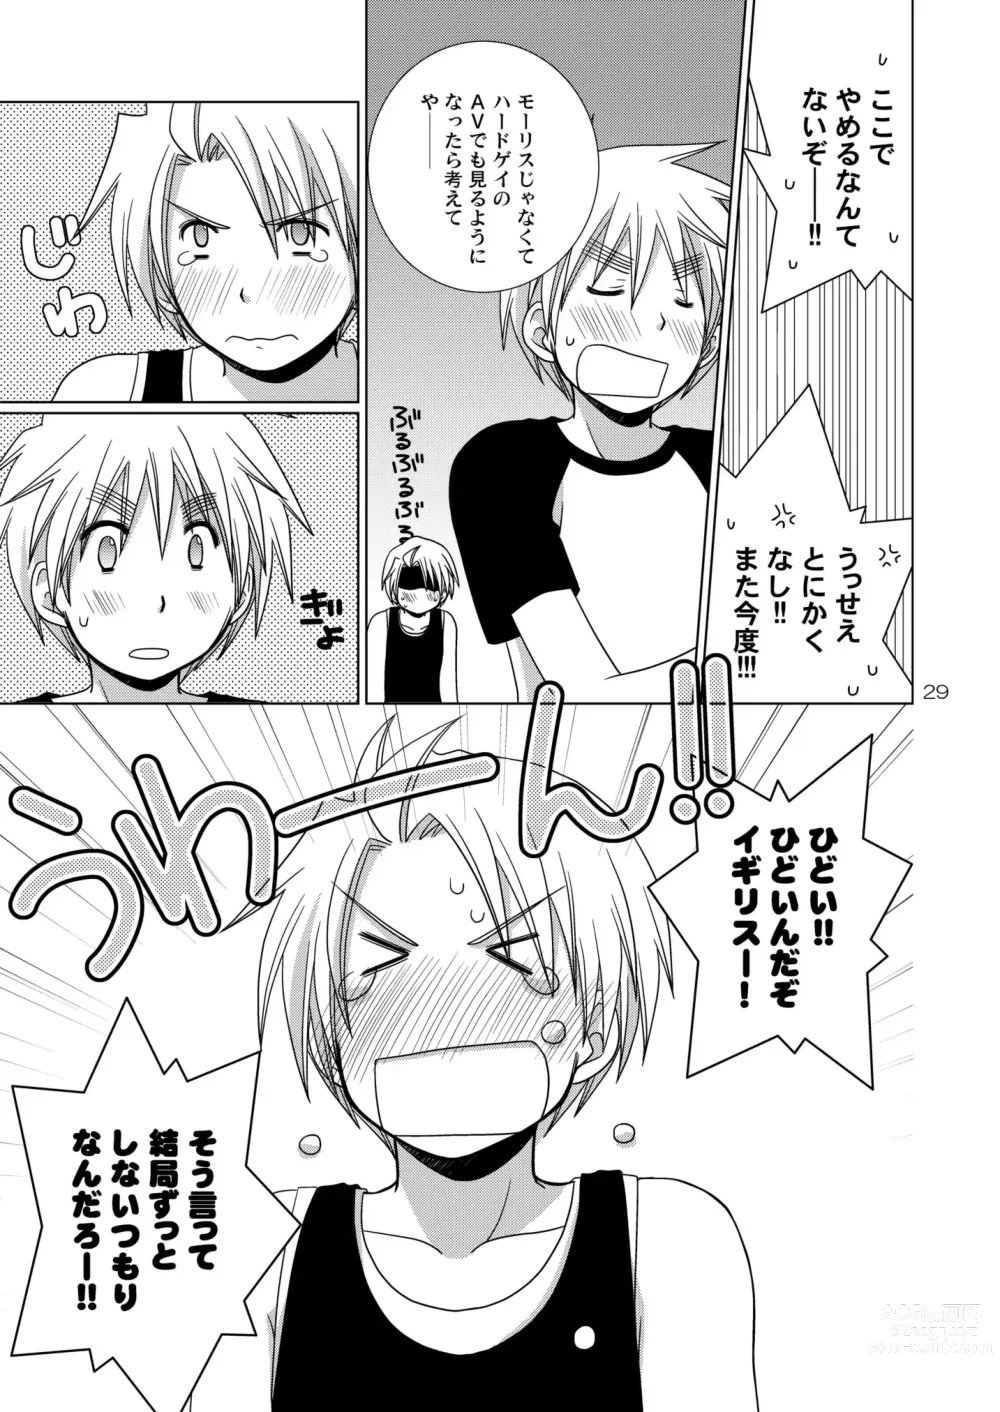 Page 29 of doujinshi [Hidariya